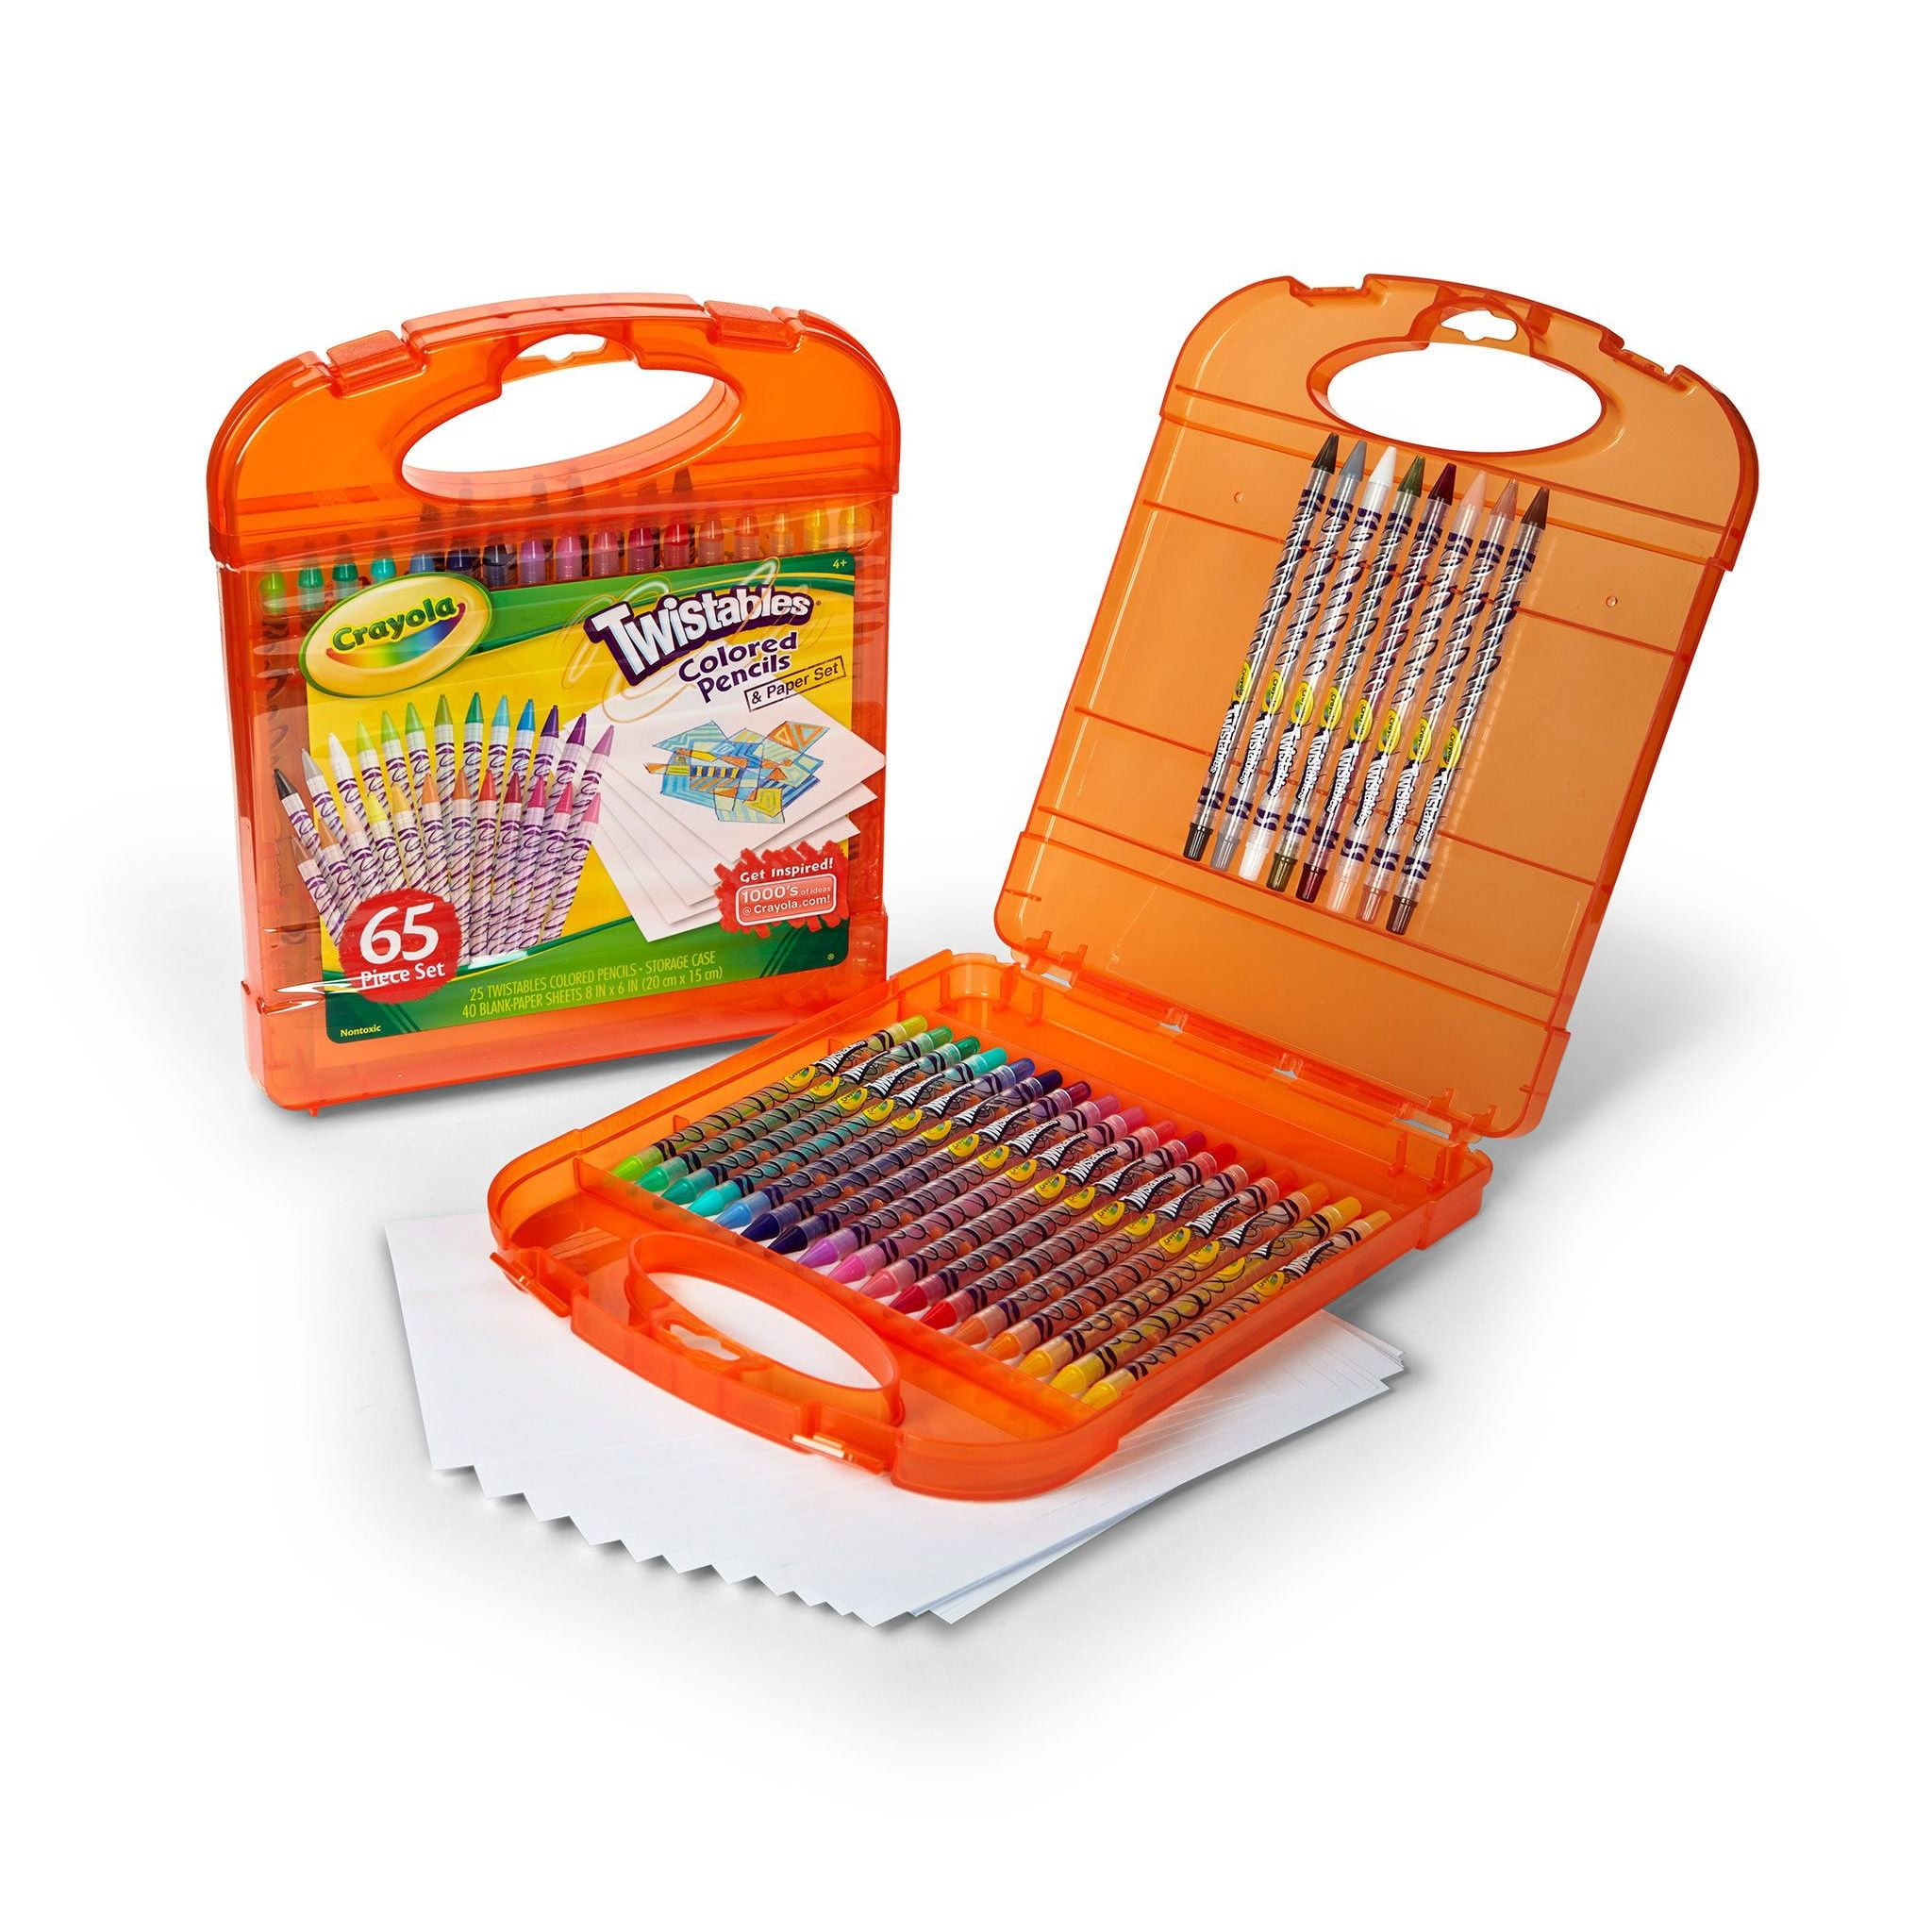 Crayola Twistable Colored Pencils & Paper Set, 65 Piece Set (25 Pencils, 40 Sheets)